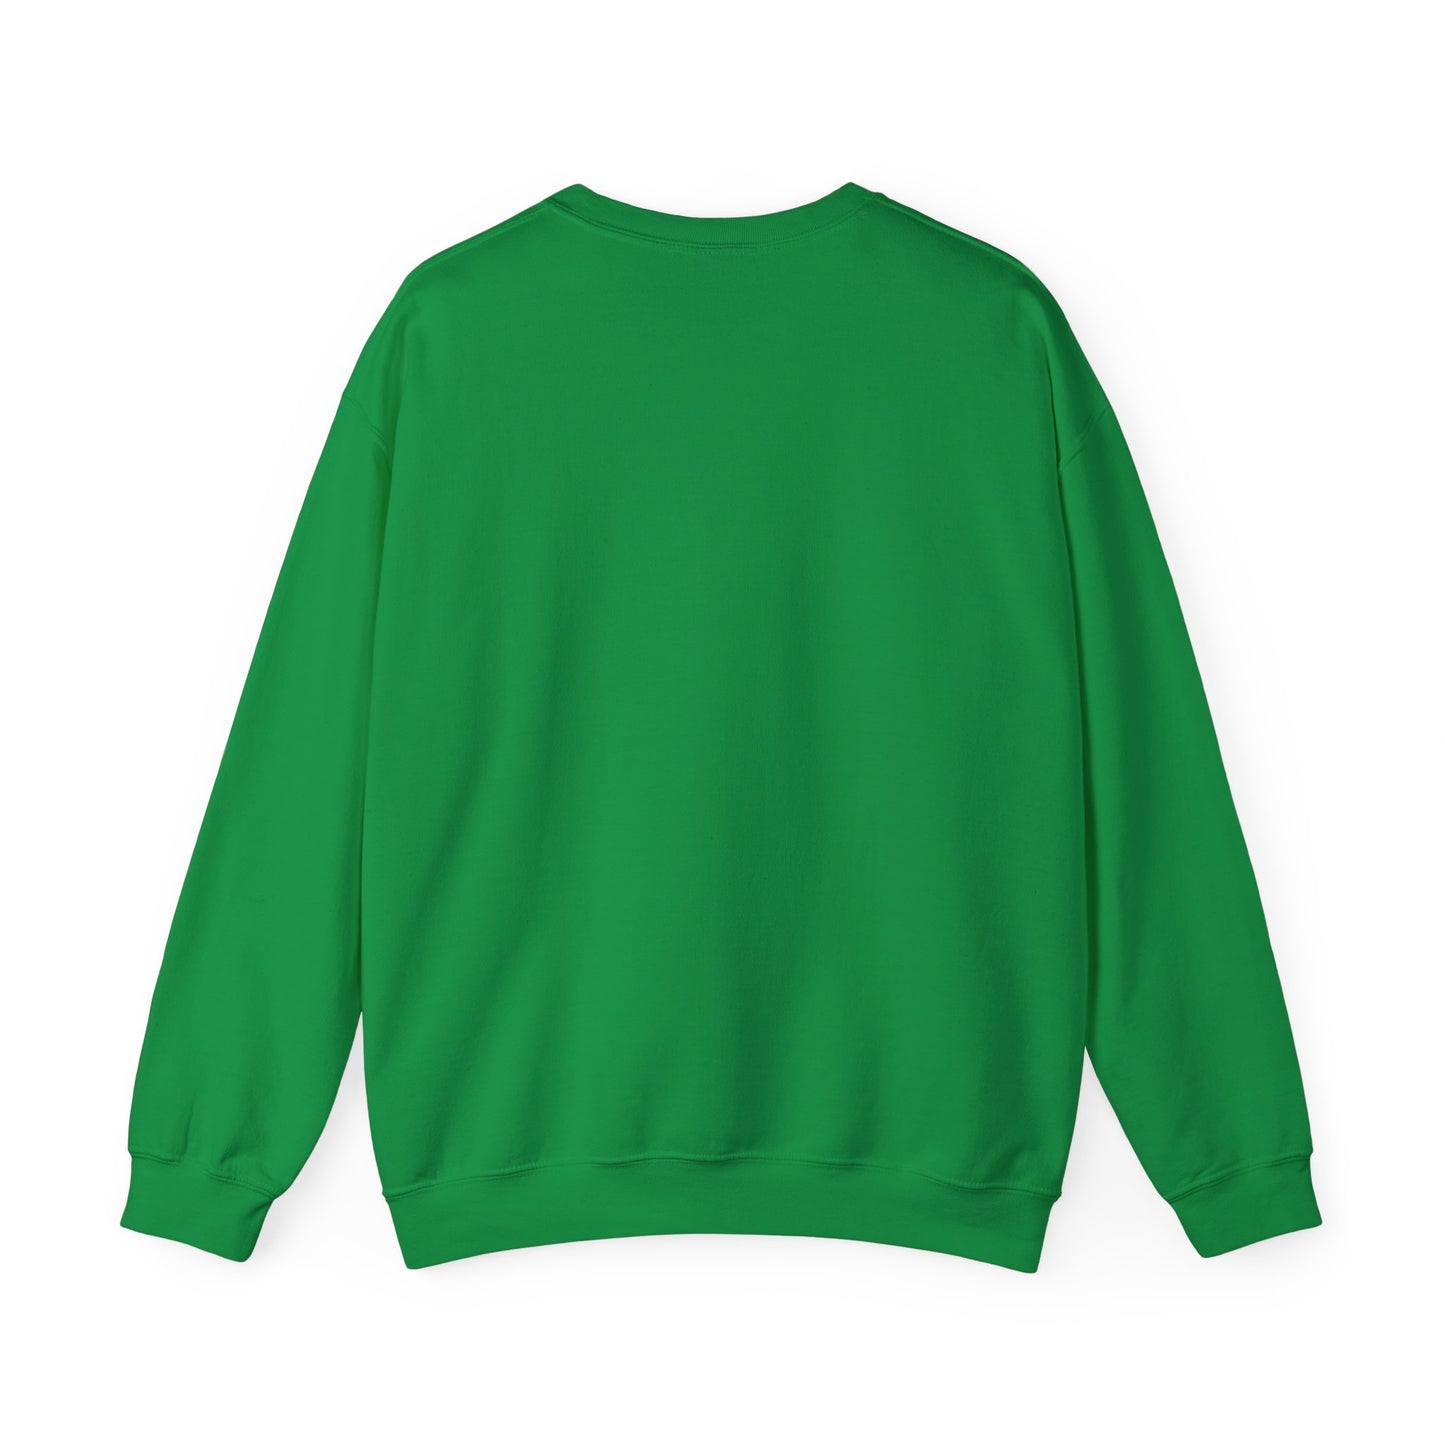 Blessed - Unisex Heavy Blend™ Crewneck Sweatshirt